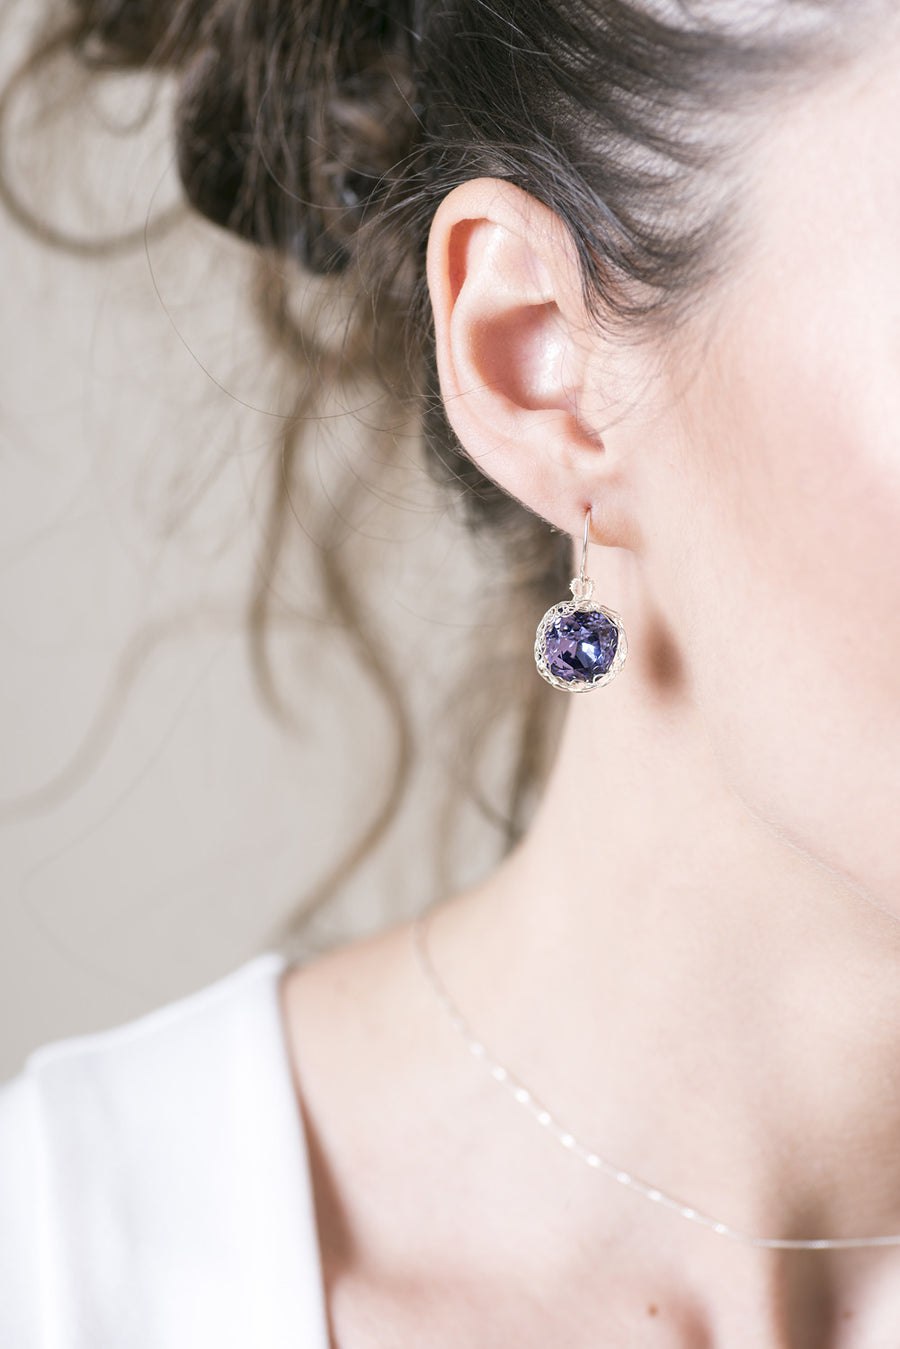 Violet Swarovski glass crystal earrings , purple dangle earrings in gold filled - Yooladesign